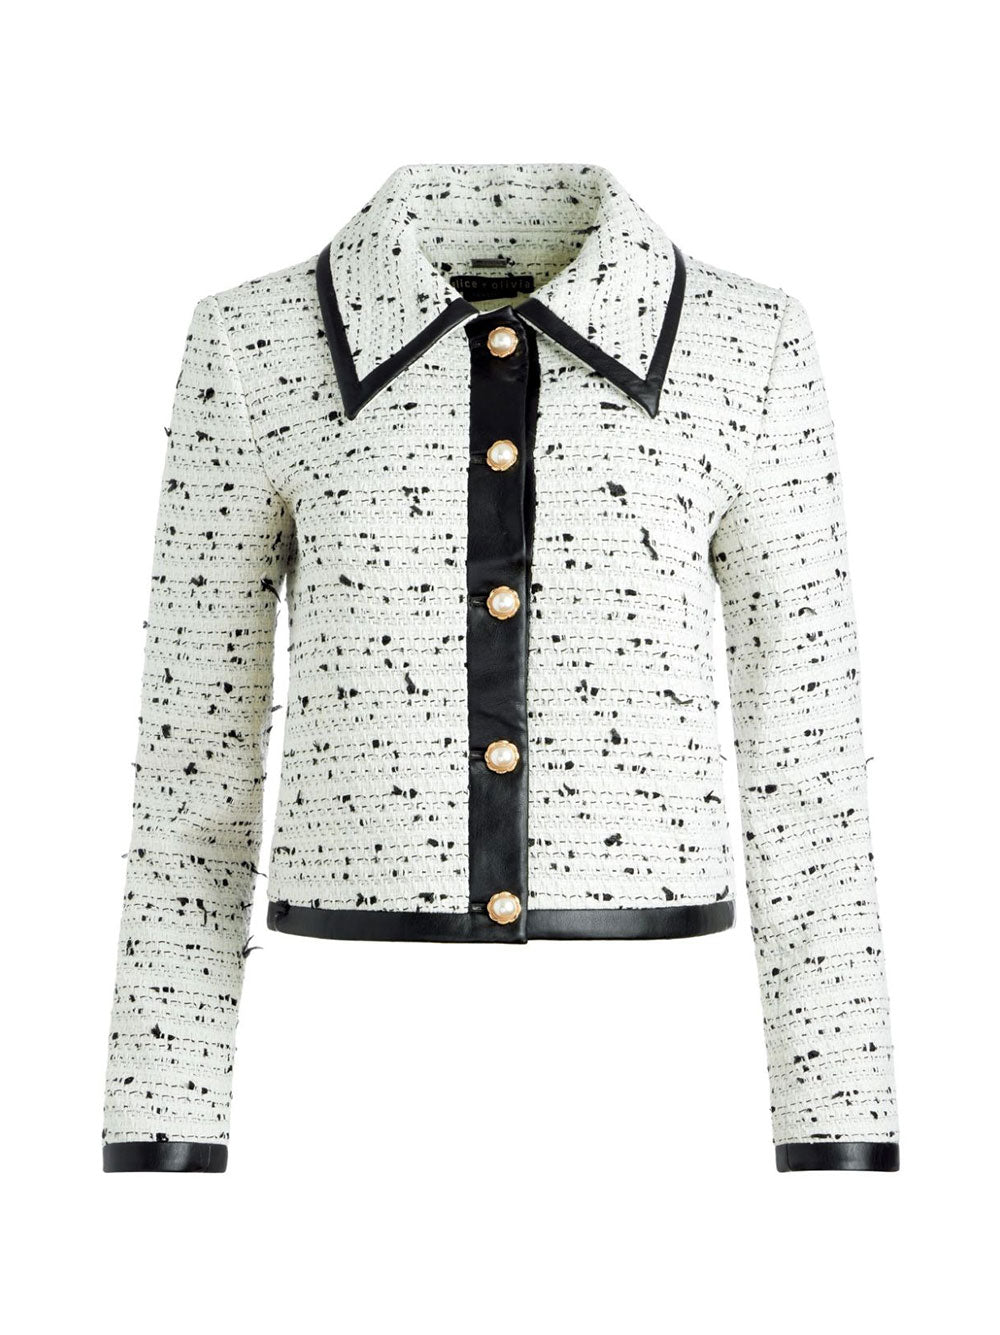 Alice + Olivia Renae Crop Vegan Leather Jacket in Off-White/Black